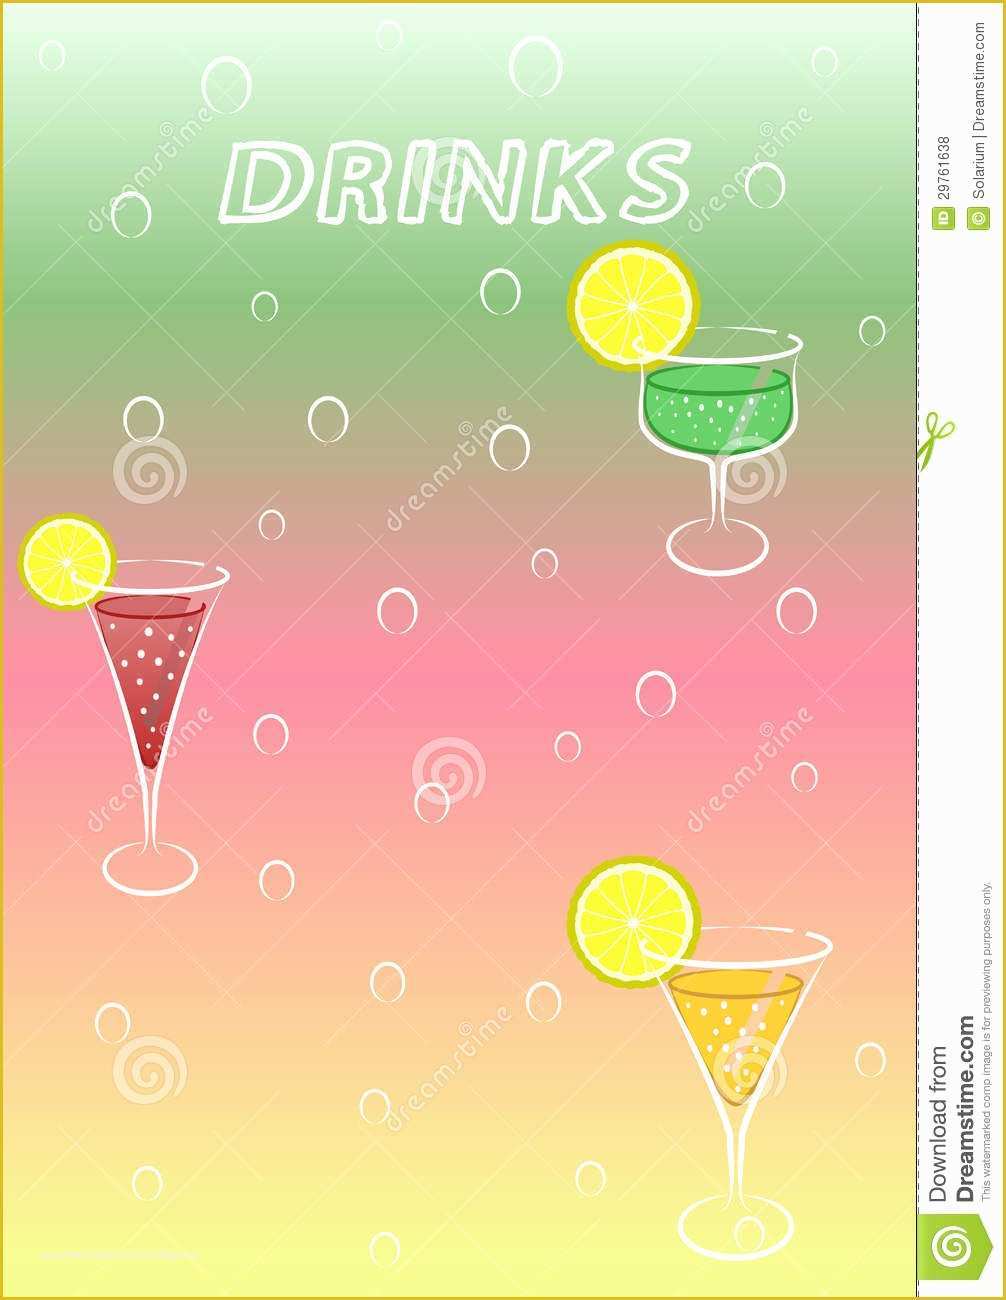 Drink Menu Template Free Of Drinks Menu Stock Vector Illustration Of Invitation